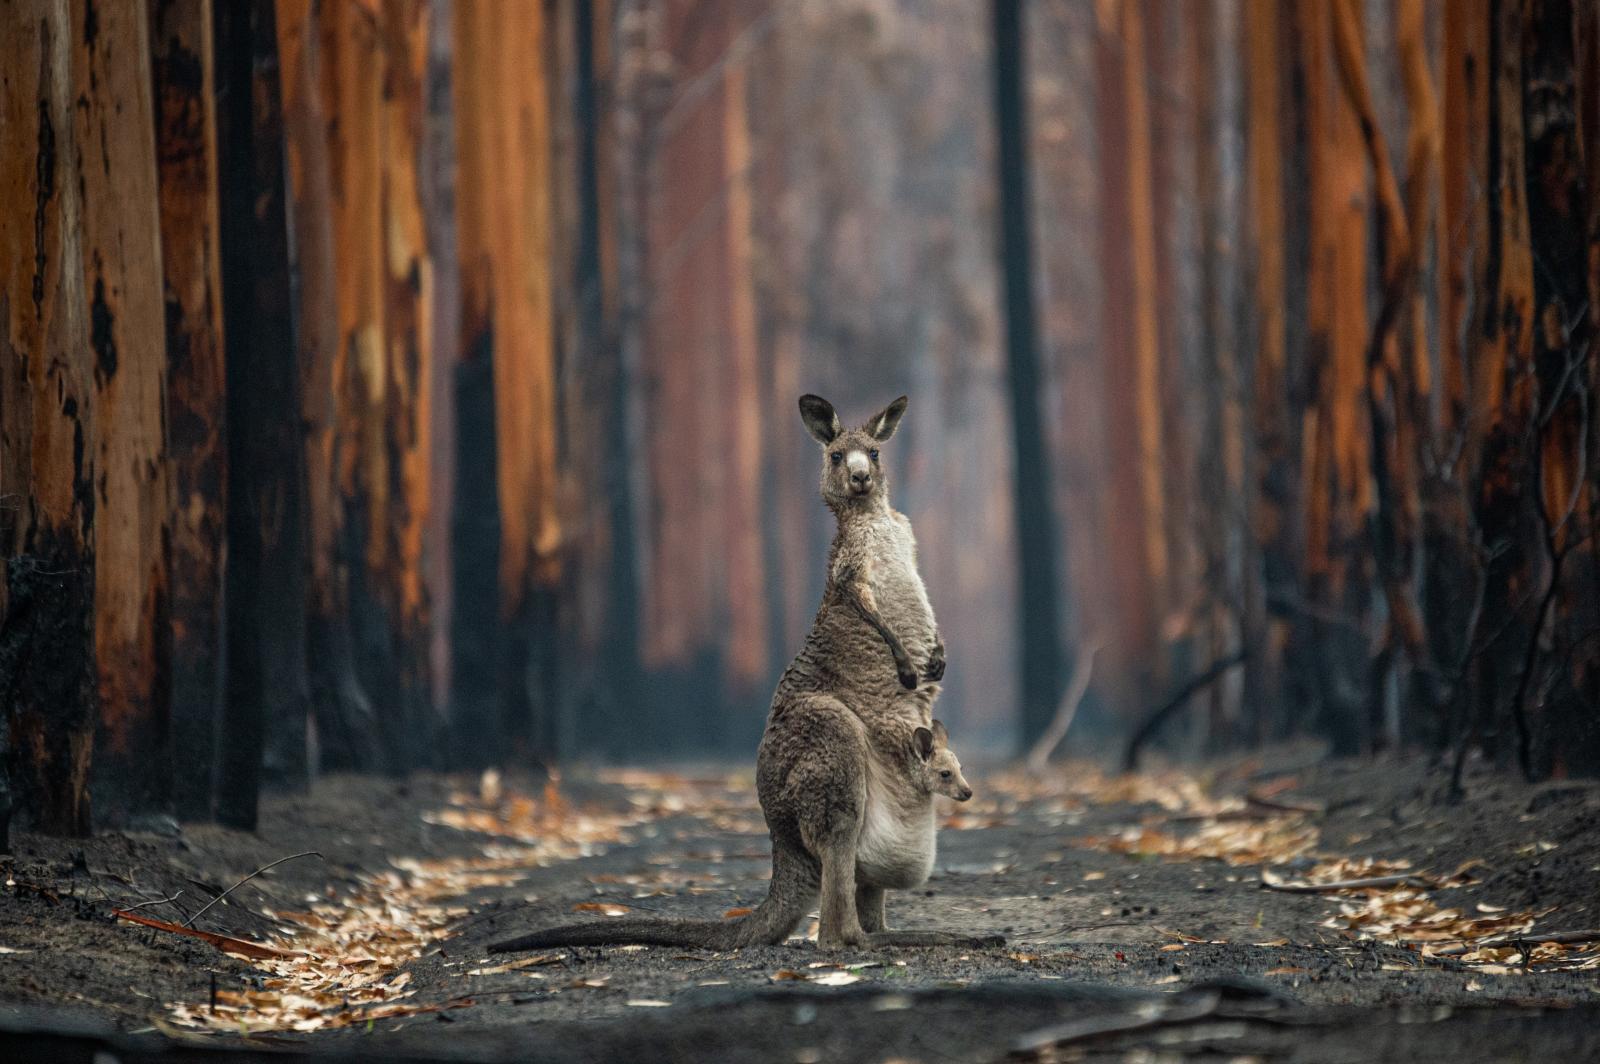  An Eastern grey kangaroo and h...award-winning photojournalists.